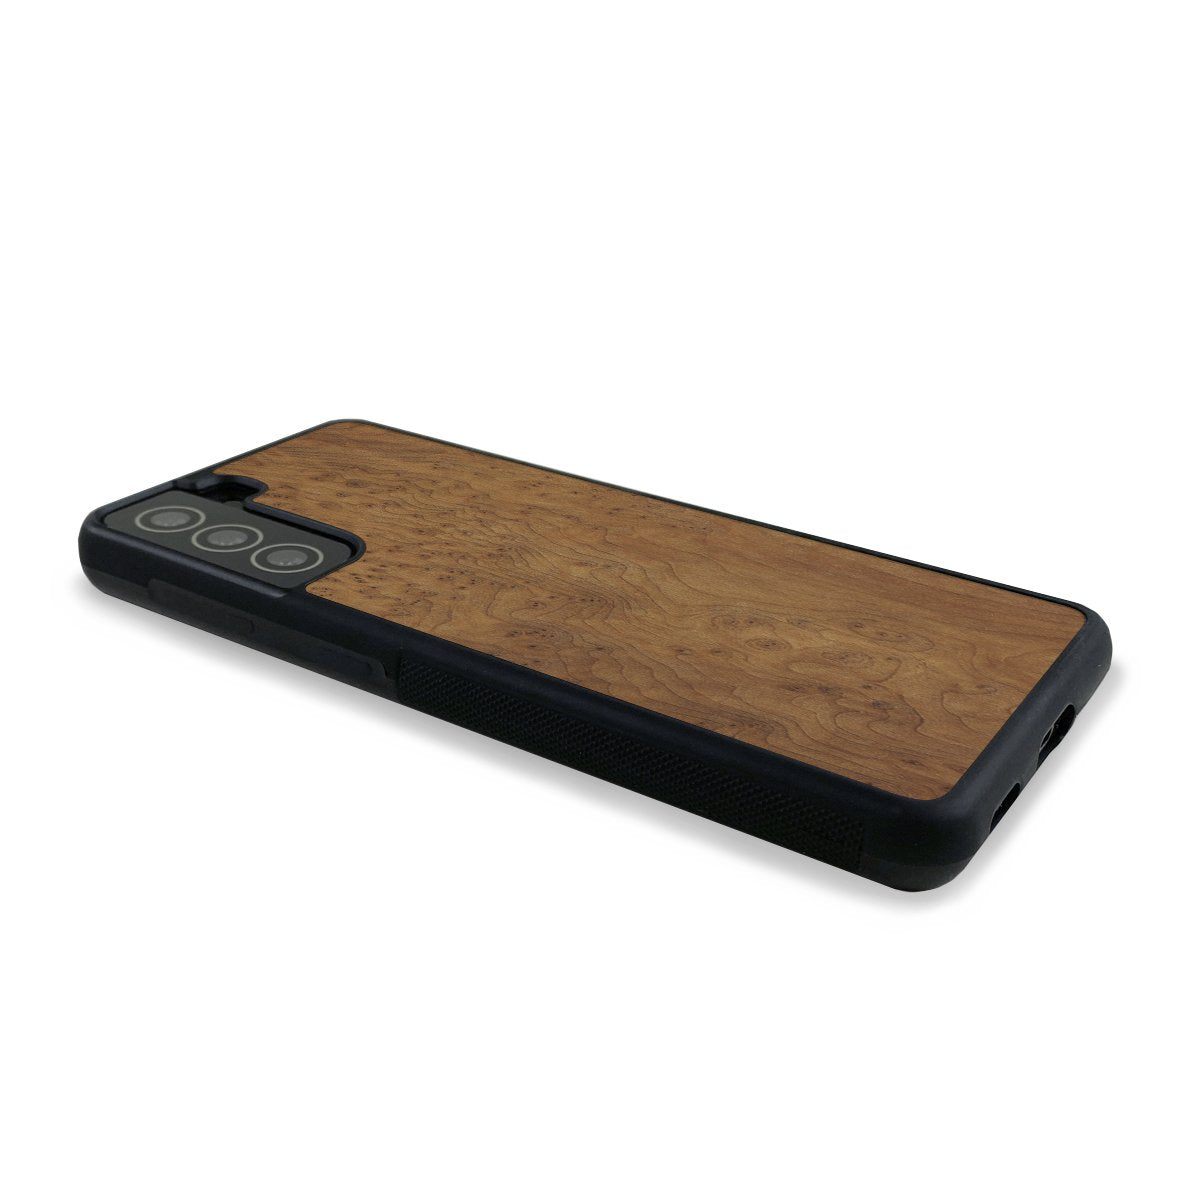 Samsung Galaxy S21+ — #WoodBack Explorer Case